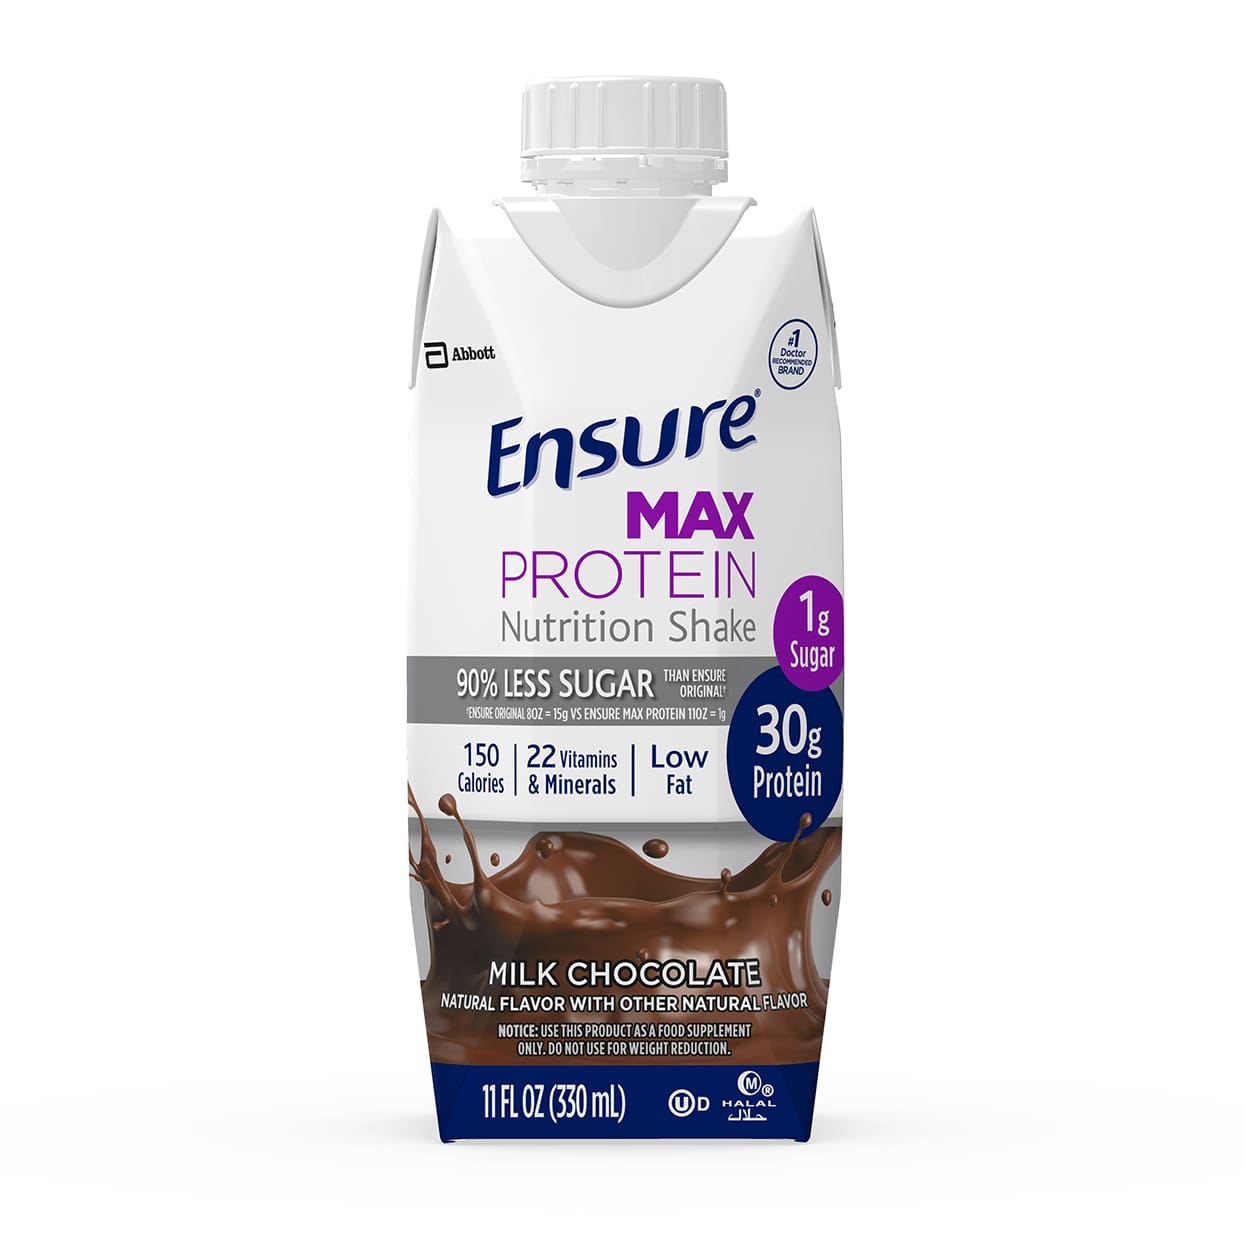 Ensure® Max Protein Nutrition Shake in Milk Chocolate